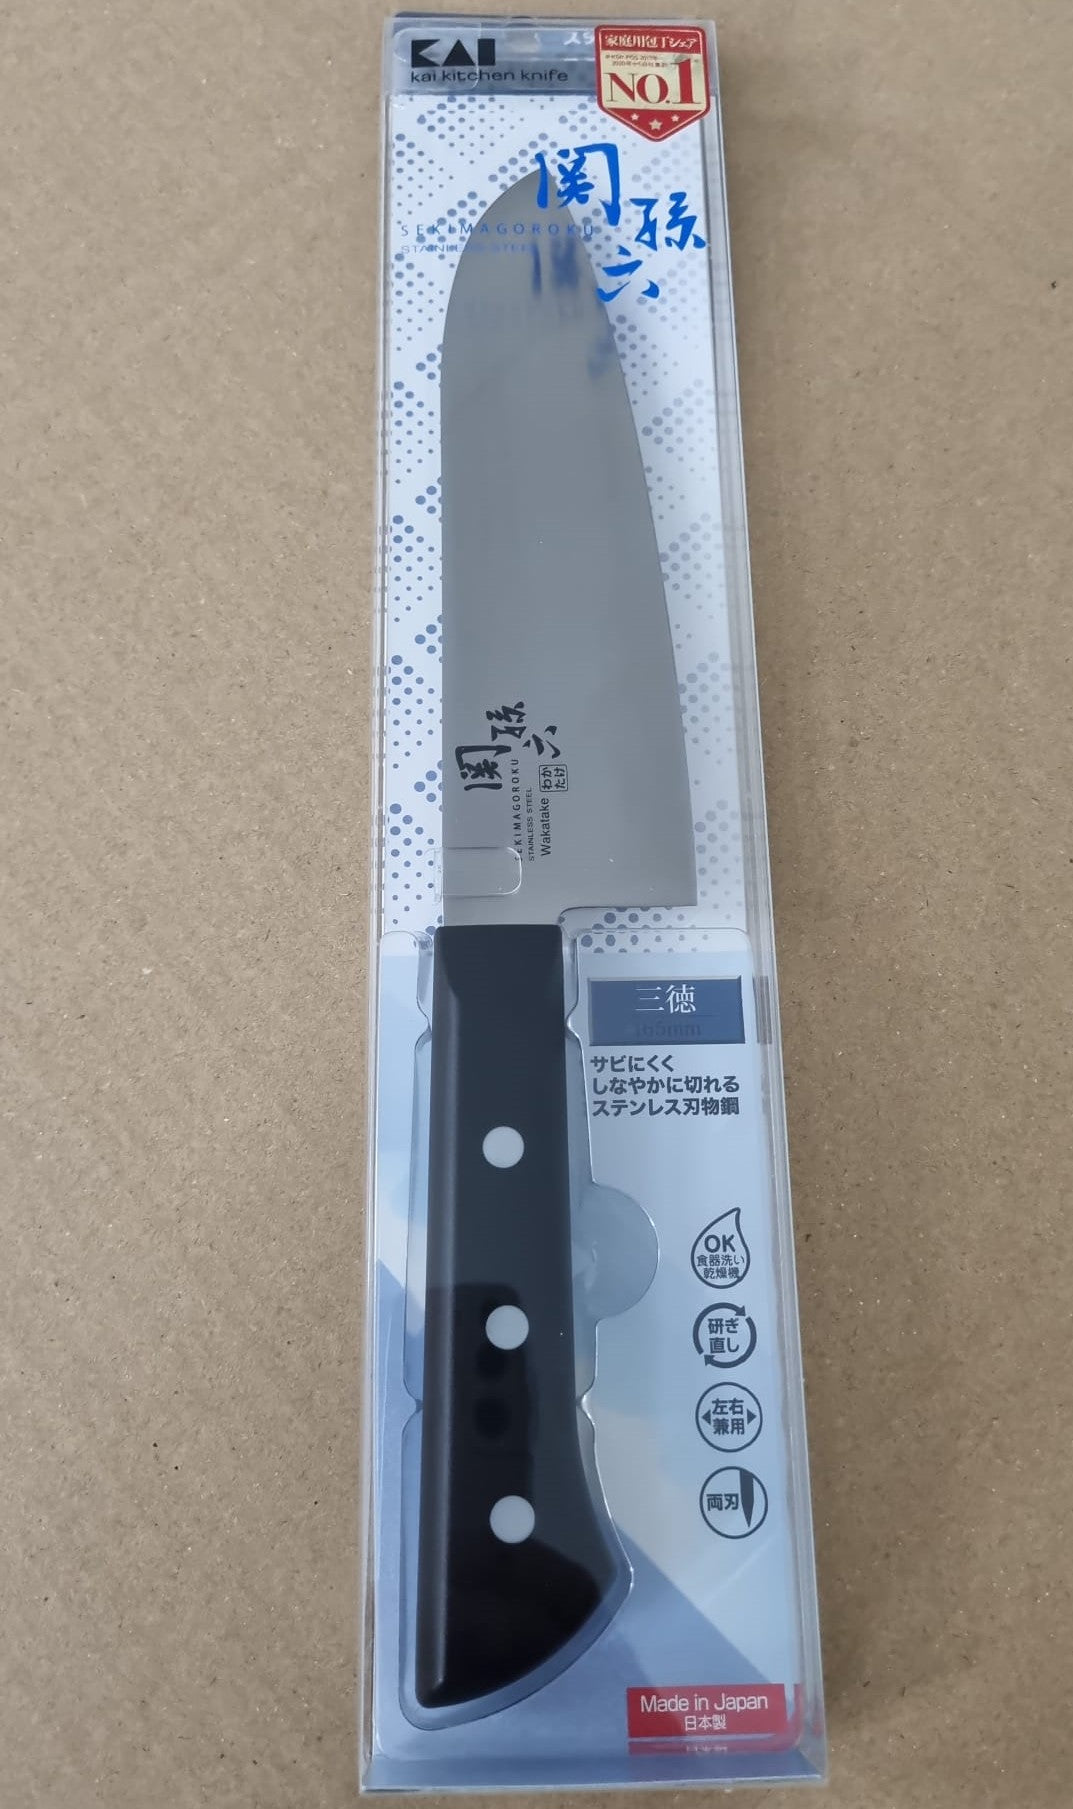 Seki Magoroku Wakatake Santoku Kitchen Knife 165mm - Made in Japan